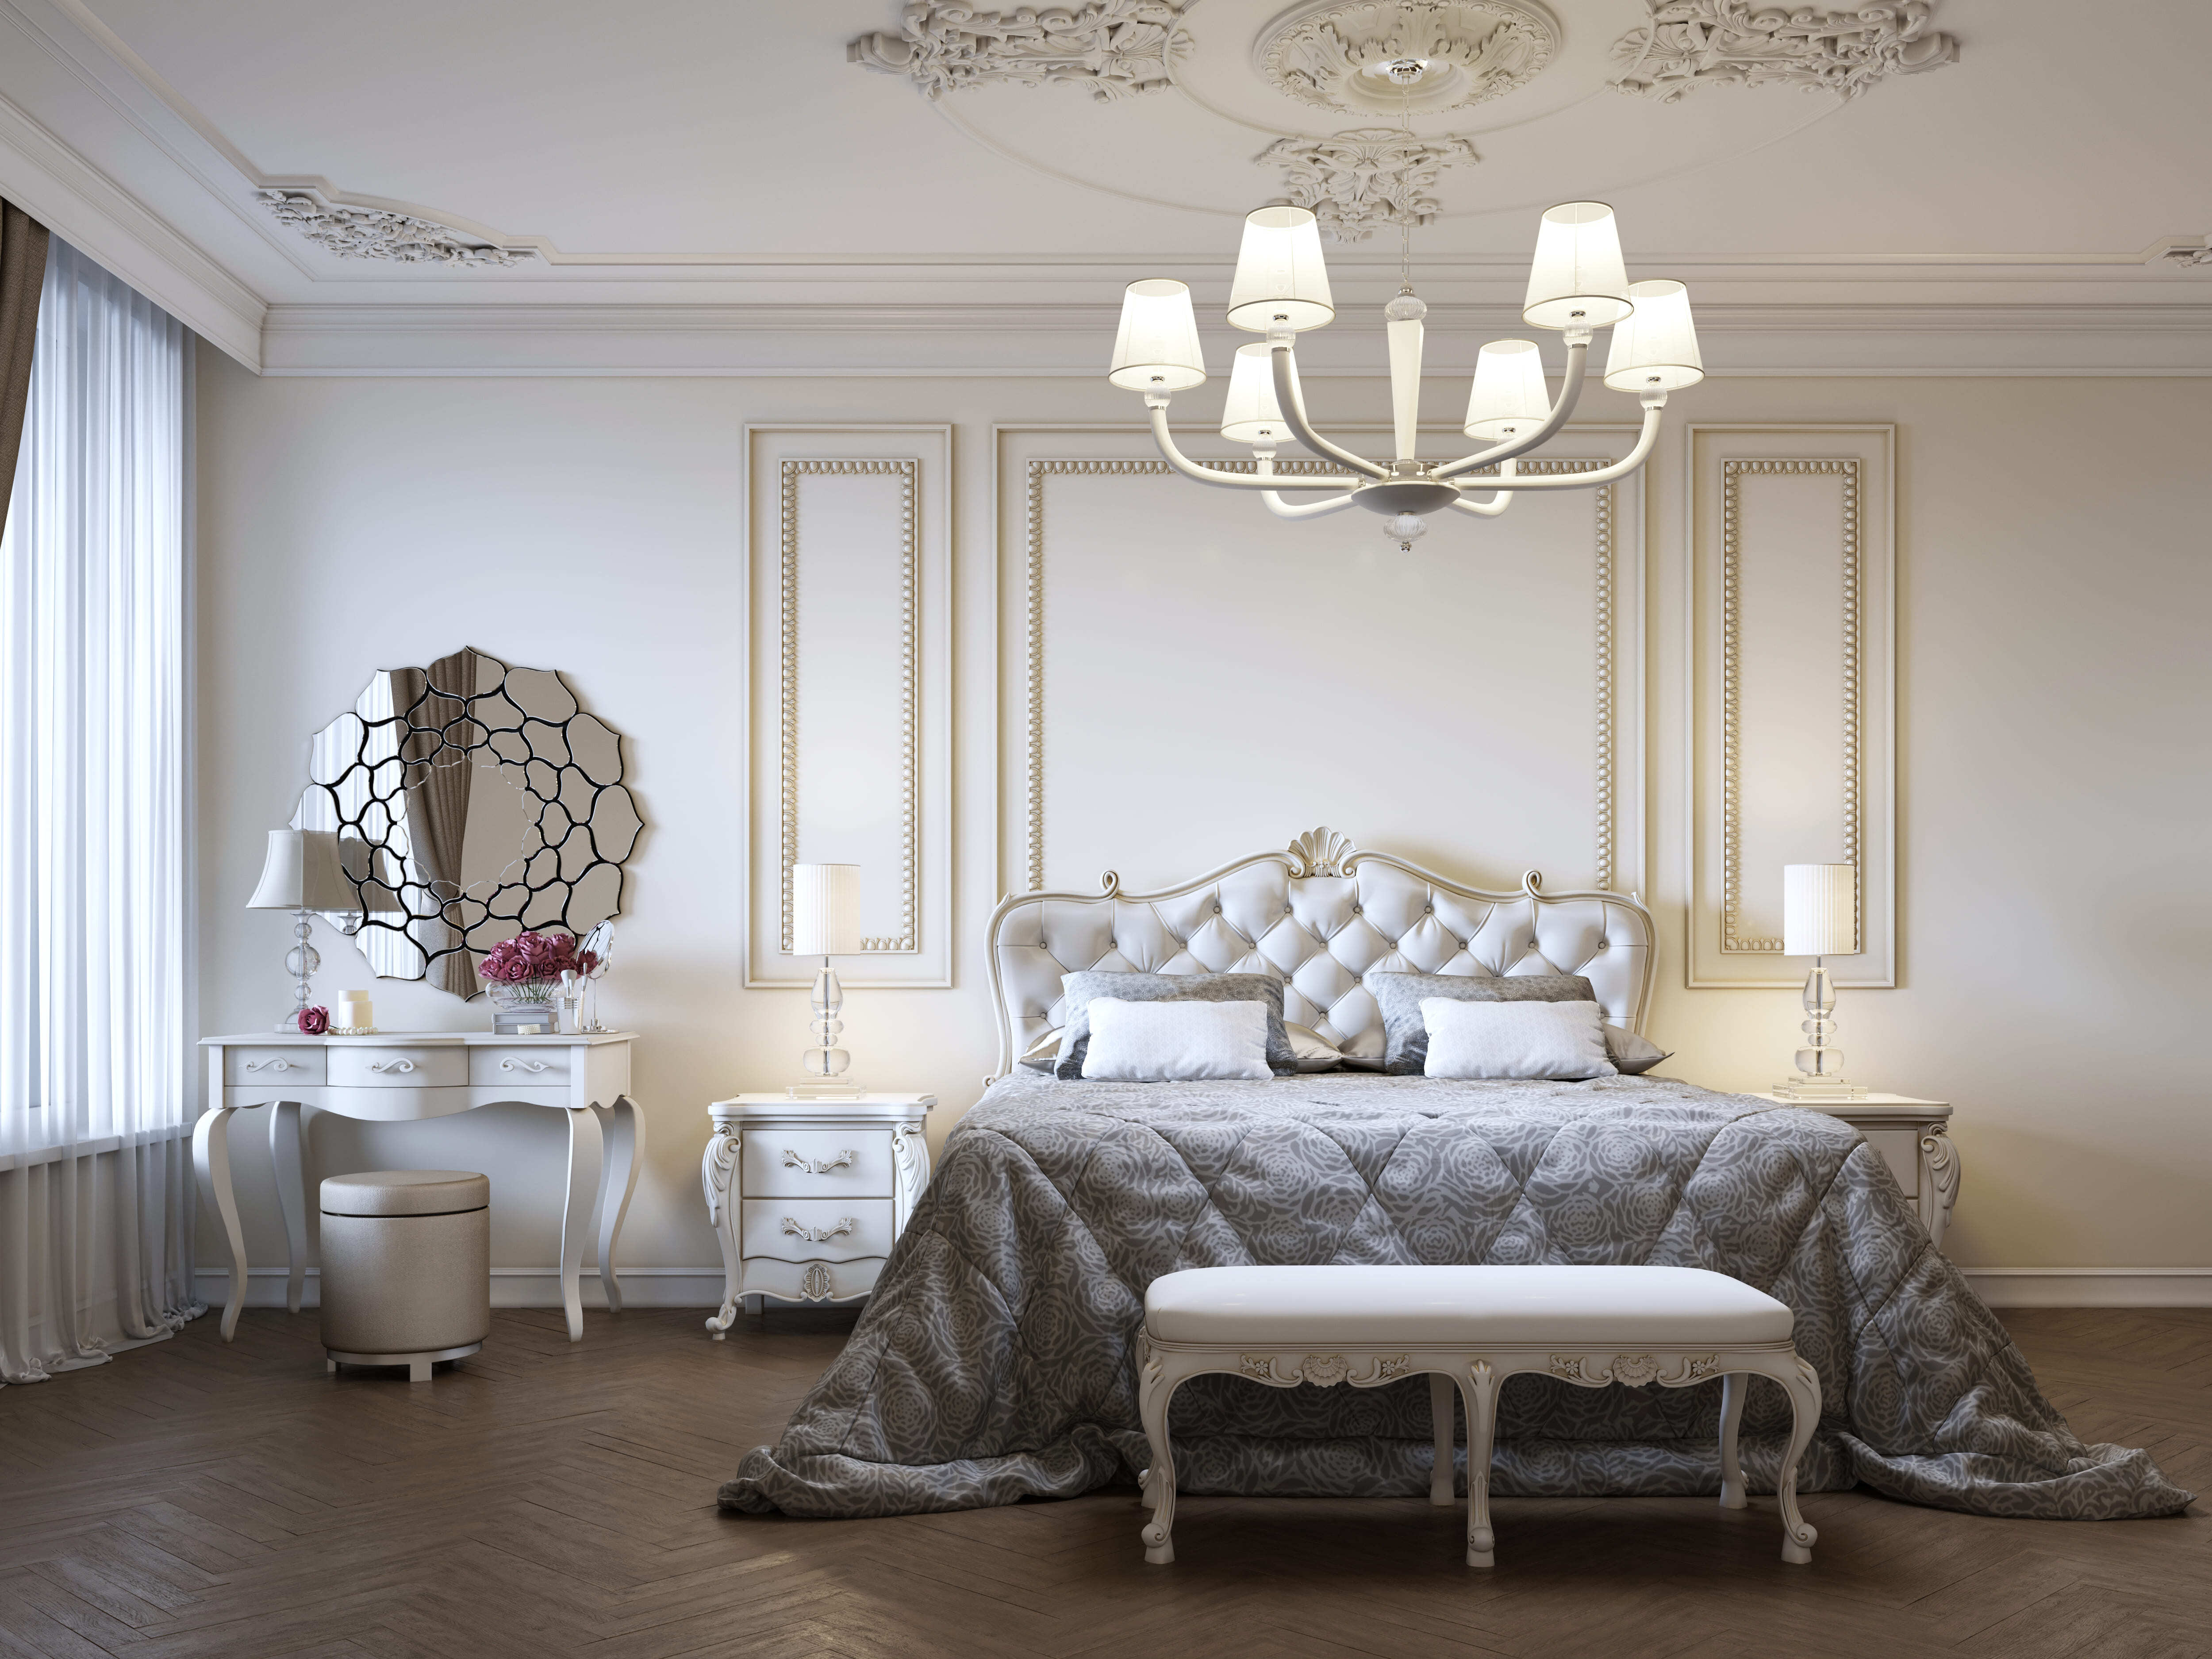 interior lighting design for bedroom